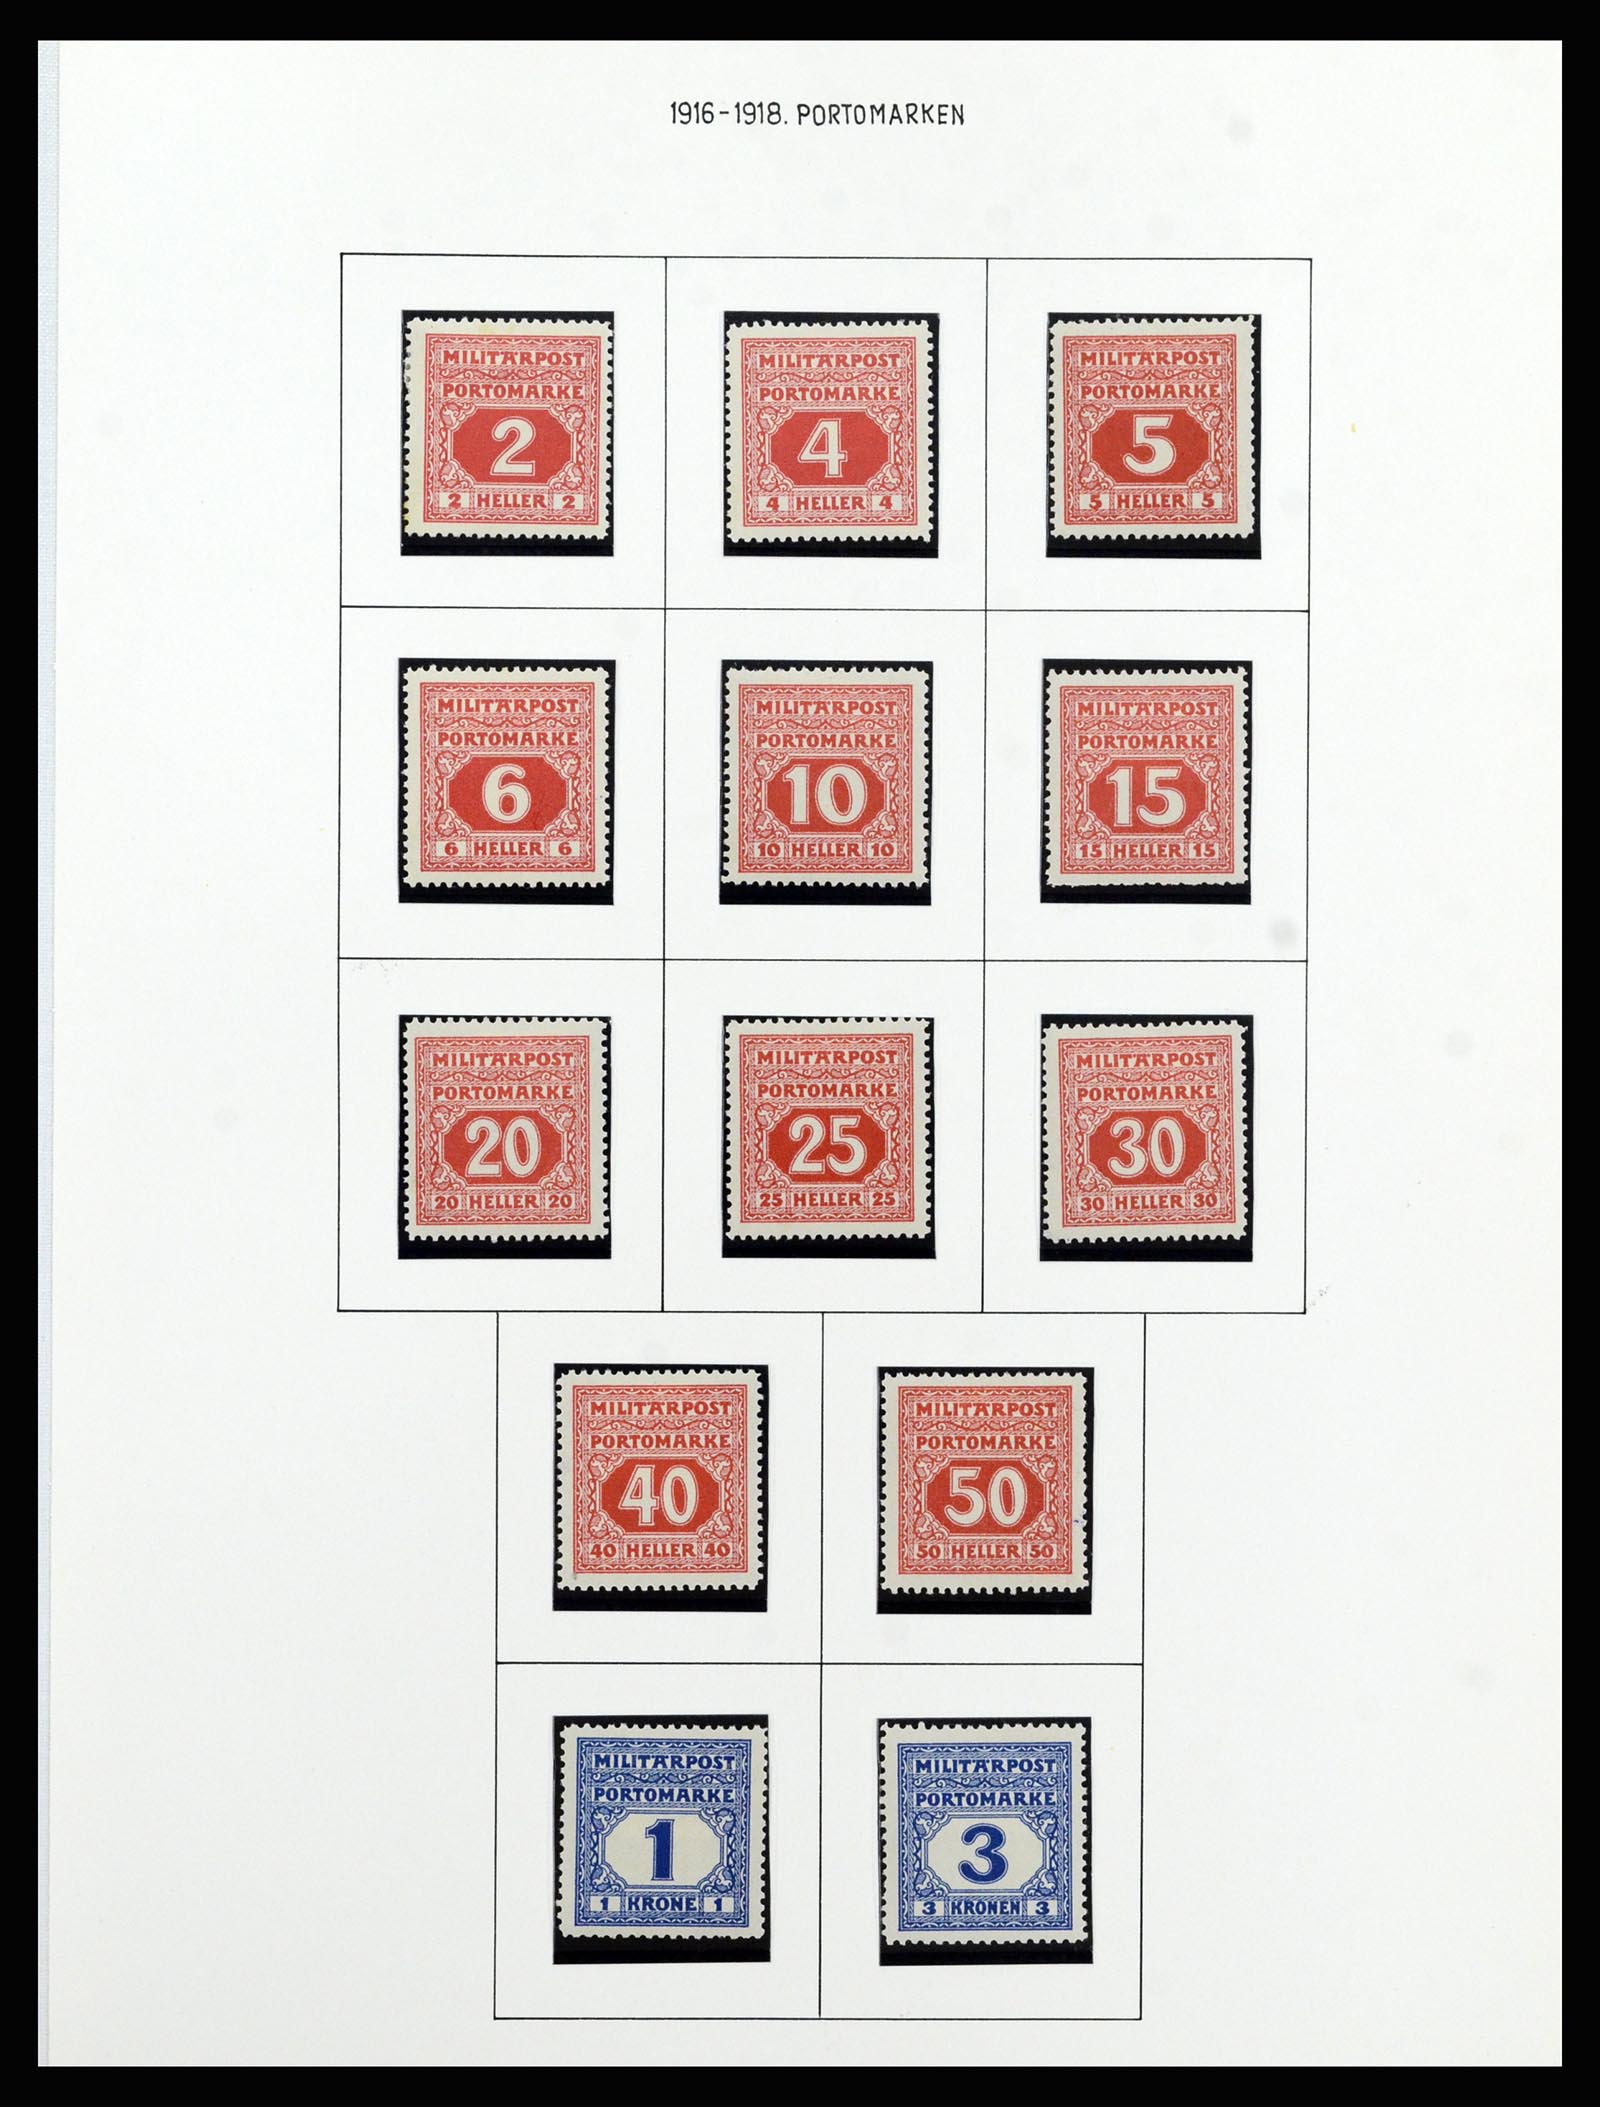 37141 038 - Stamp collection 37141 Bosnia Herzegovina 1879-1918.